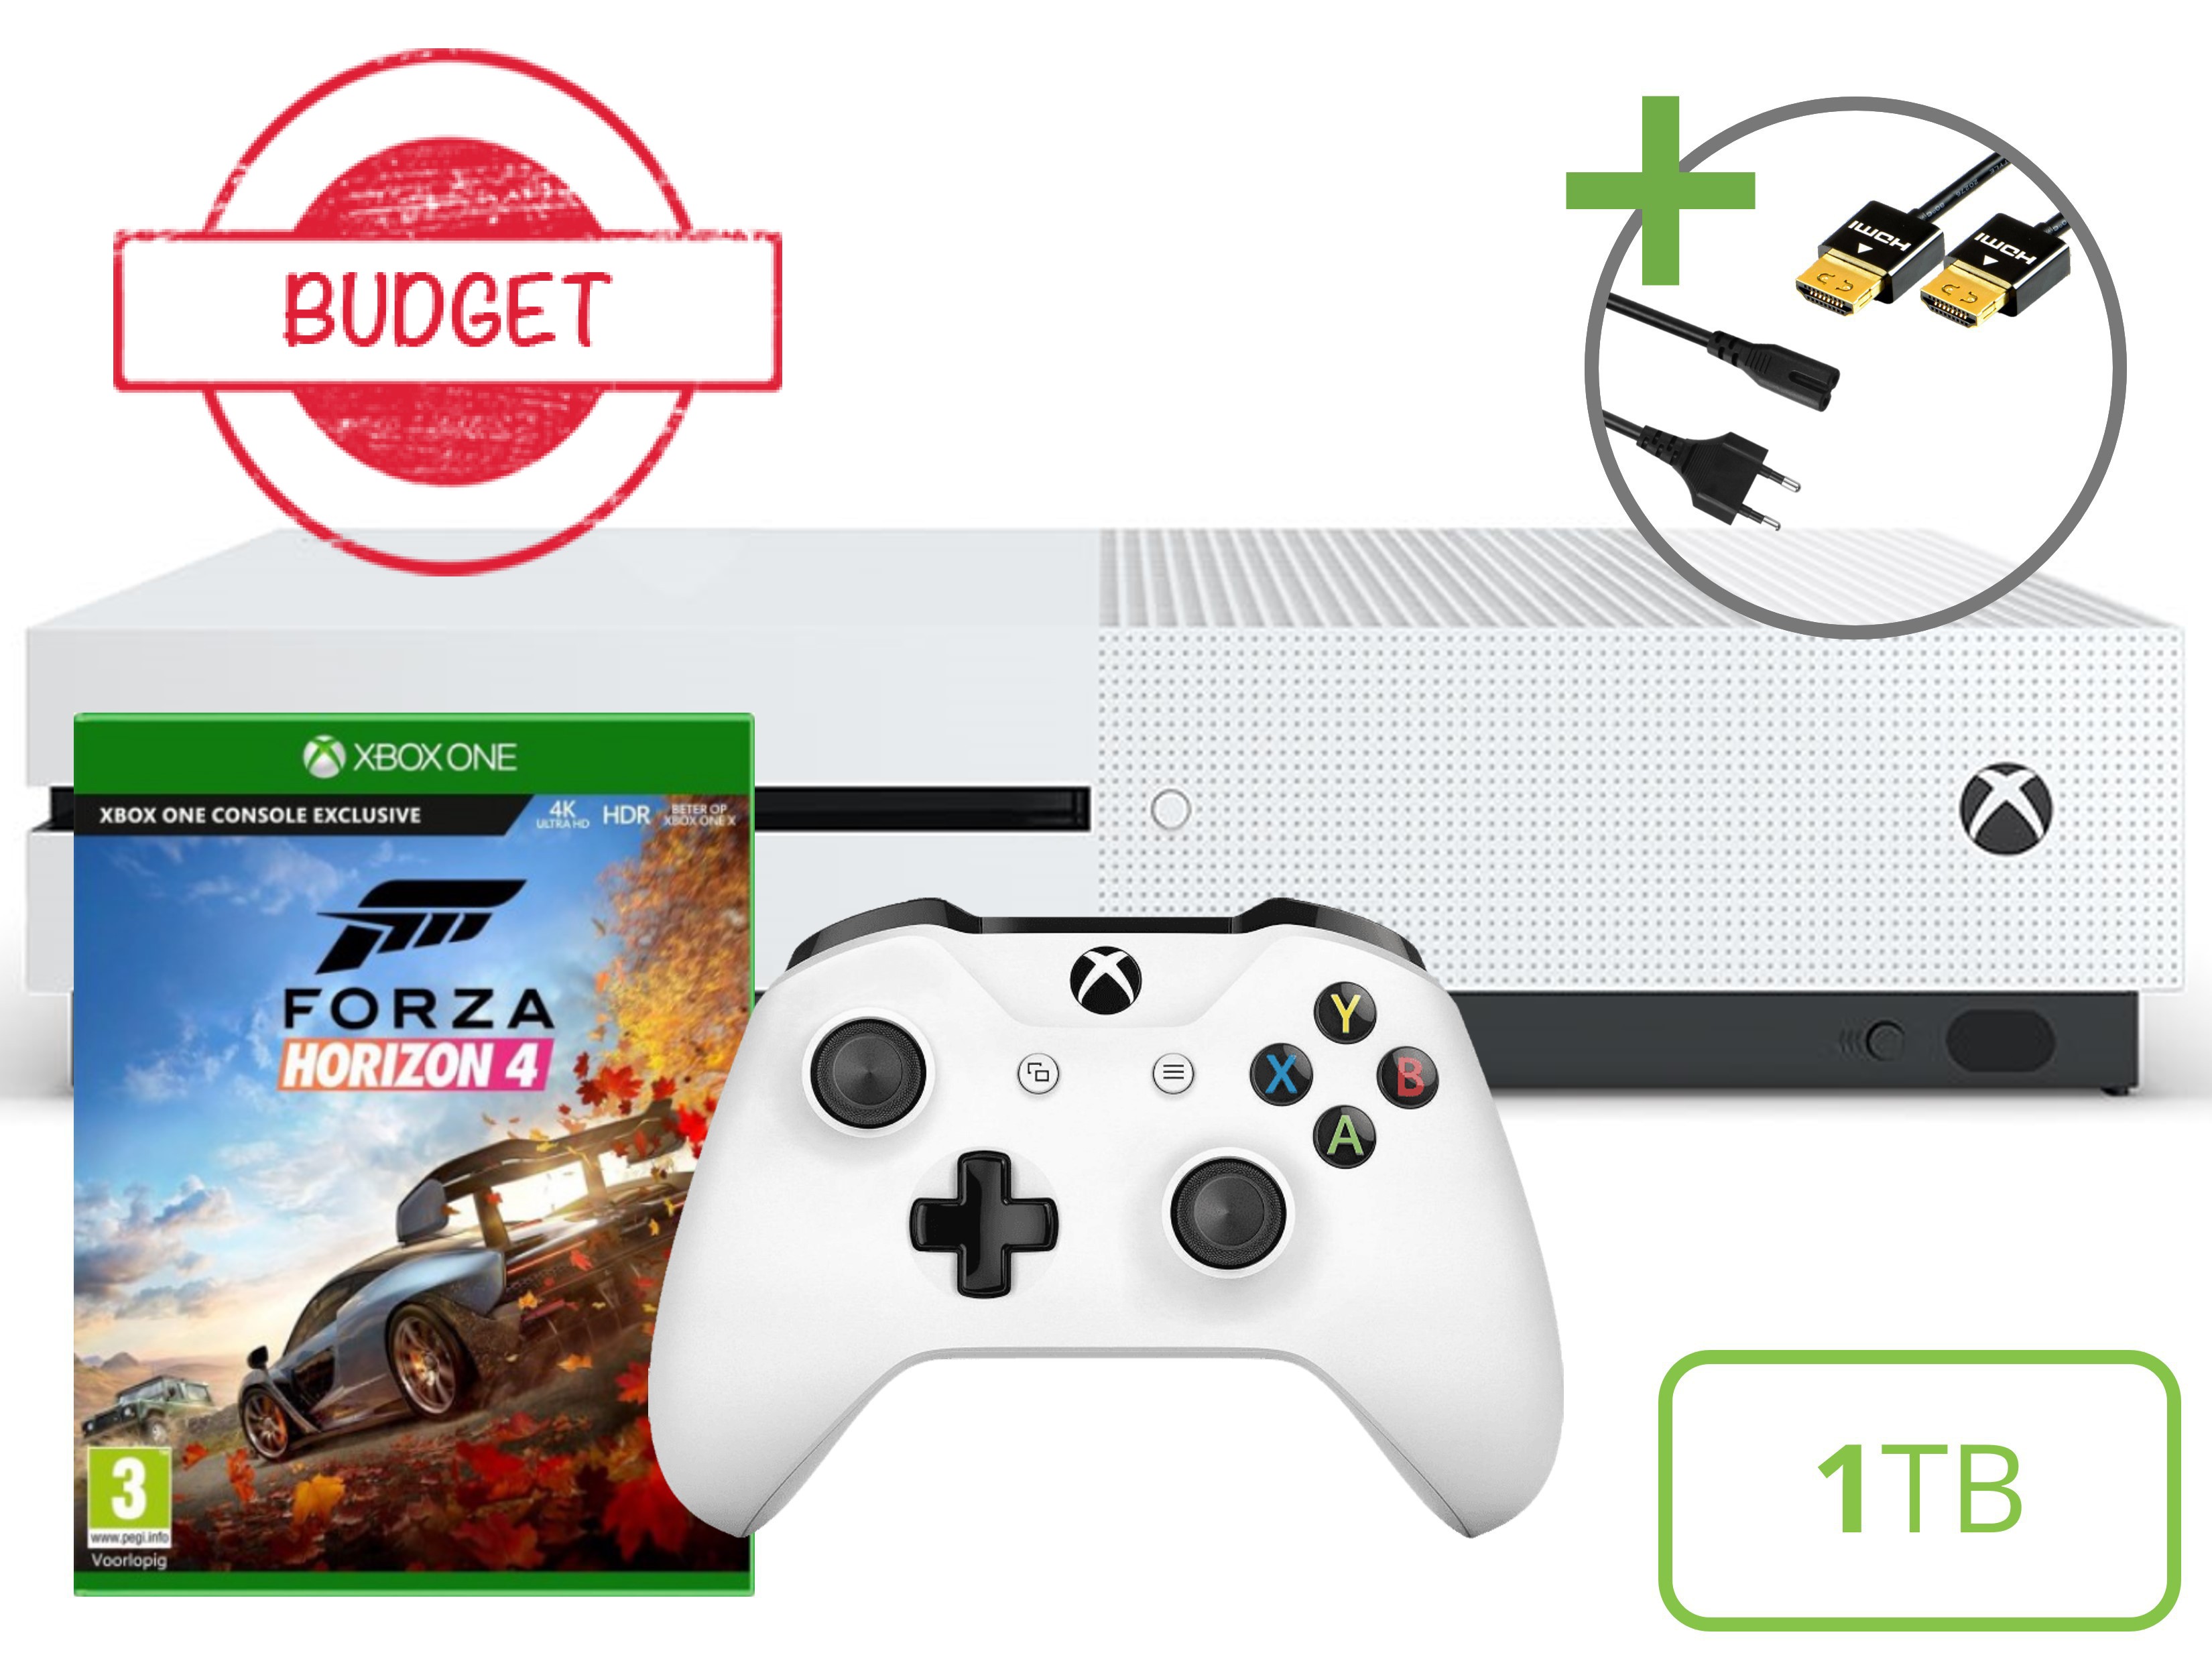 Microsoft Xbox One S Starter Pack - 1TB Forza Horizon 4  Edition - Budget Kopen | Xbox One Hardware